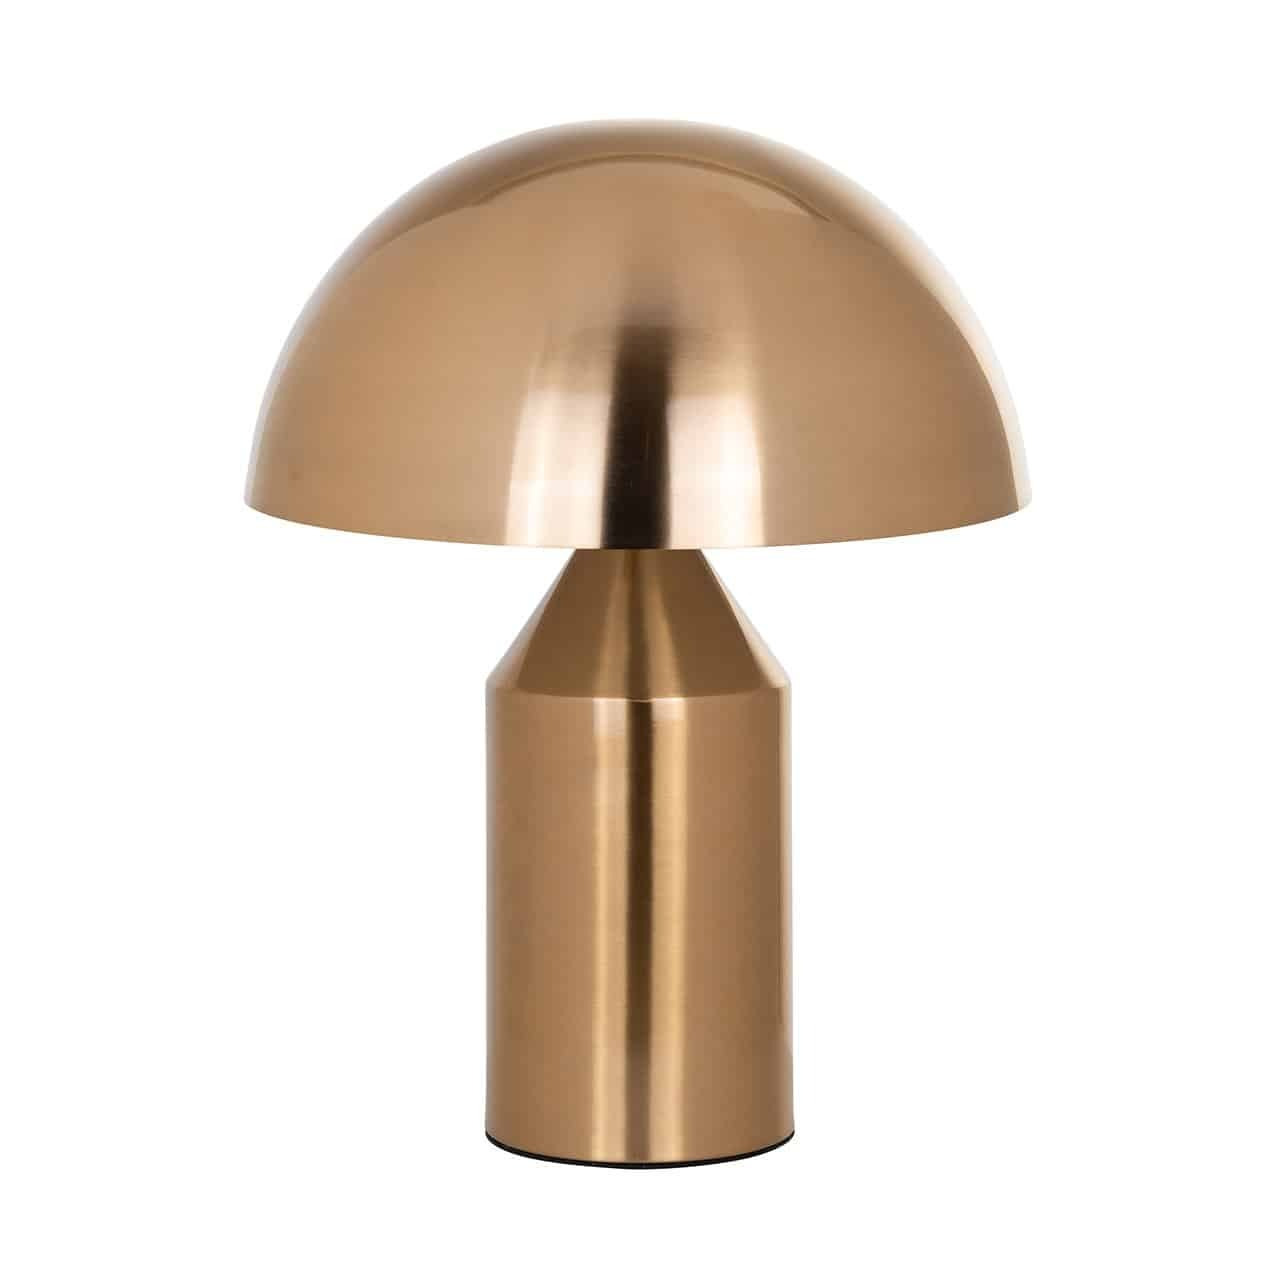 Richmond Alicia Table Lamp in Gold - image 1